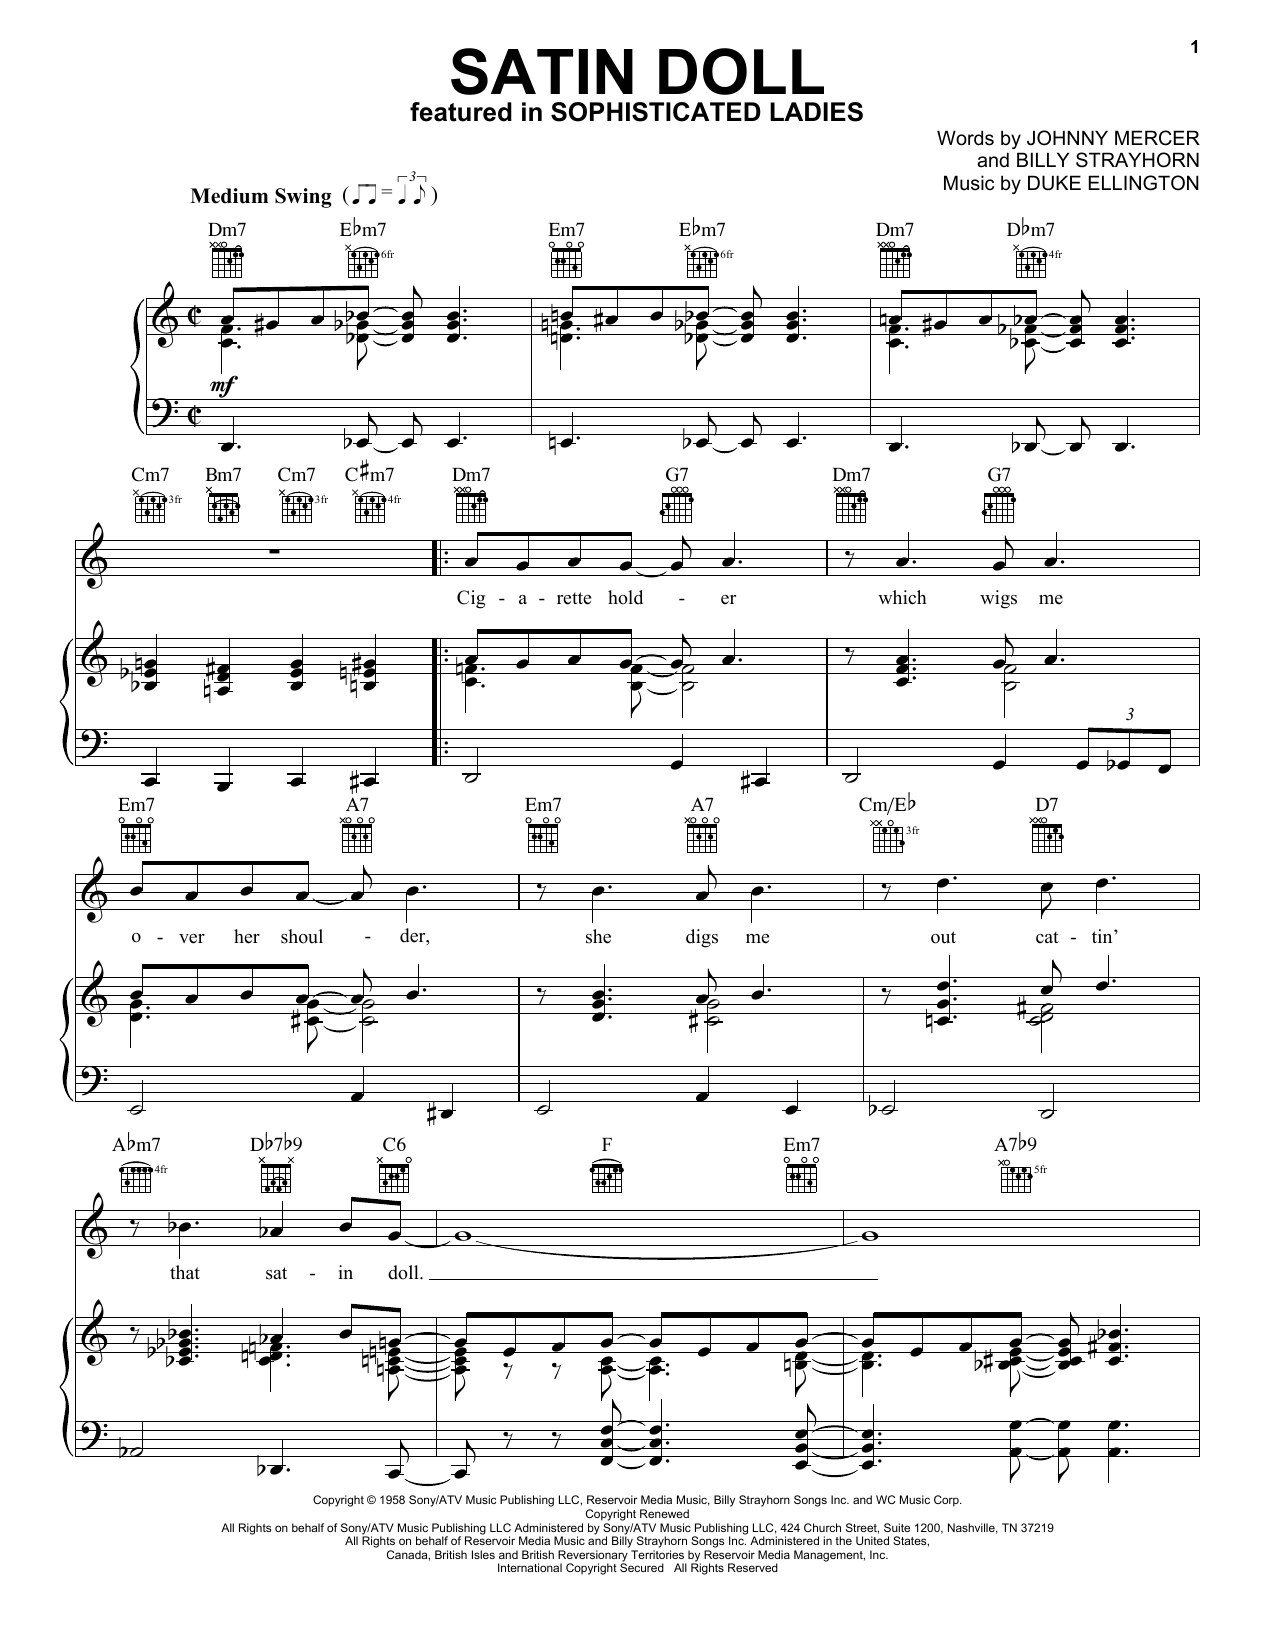 Duke Ellington Satin Doll Sheet Music Notes & Chords for Flute - Download or Print PDF